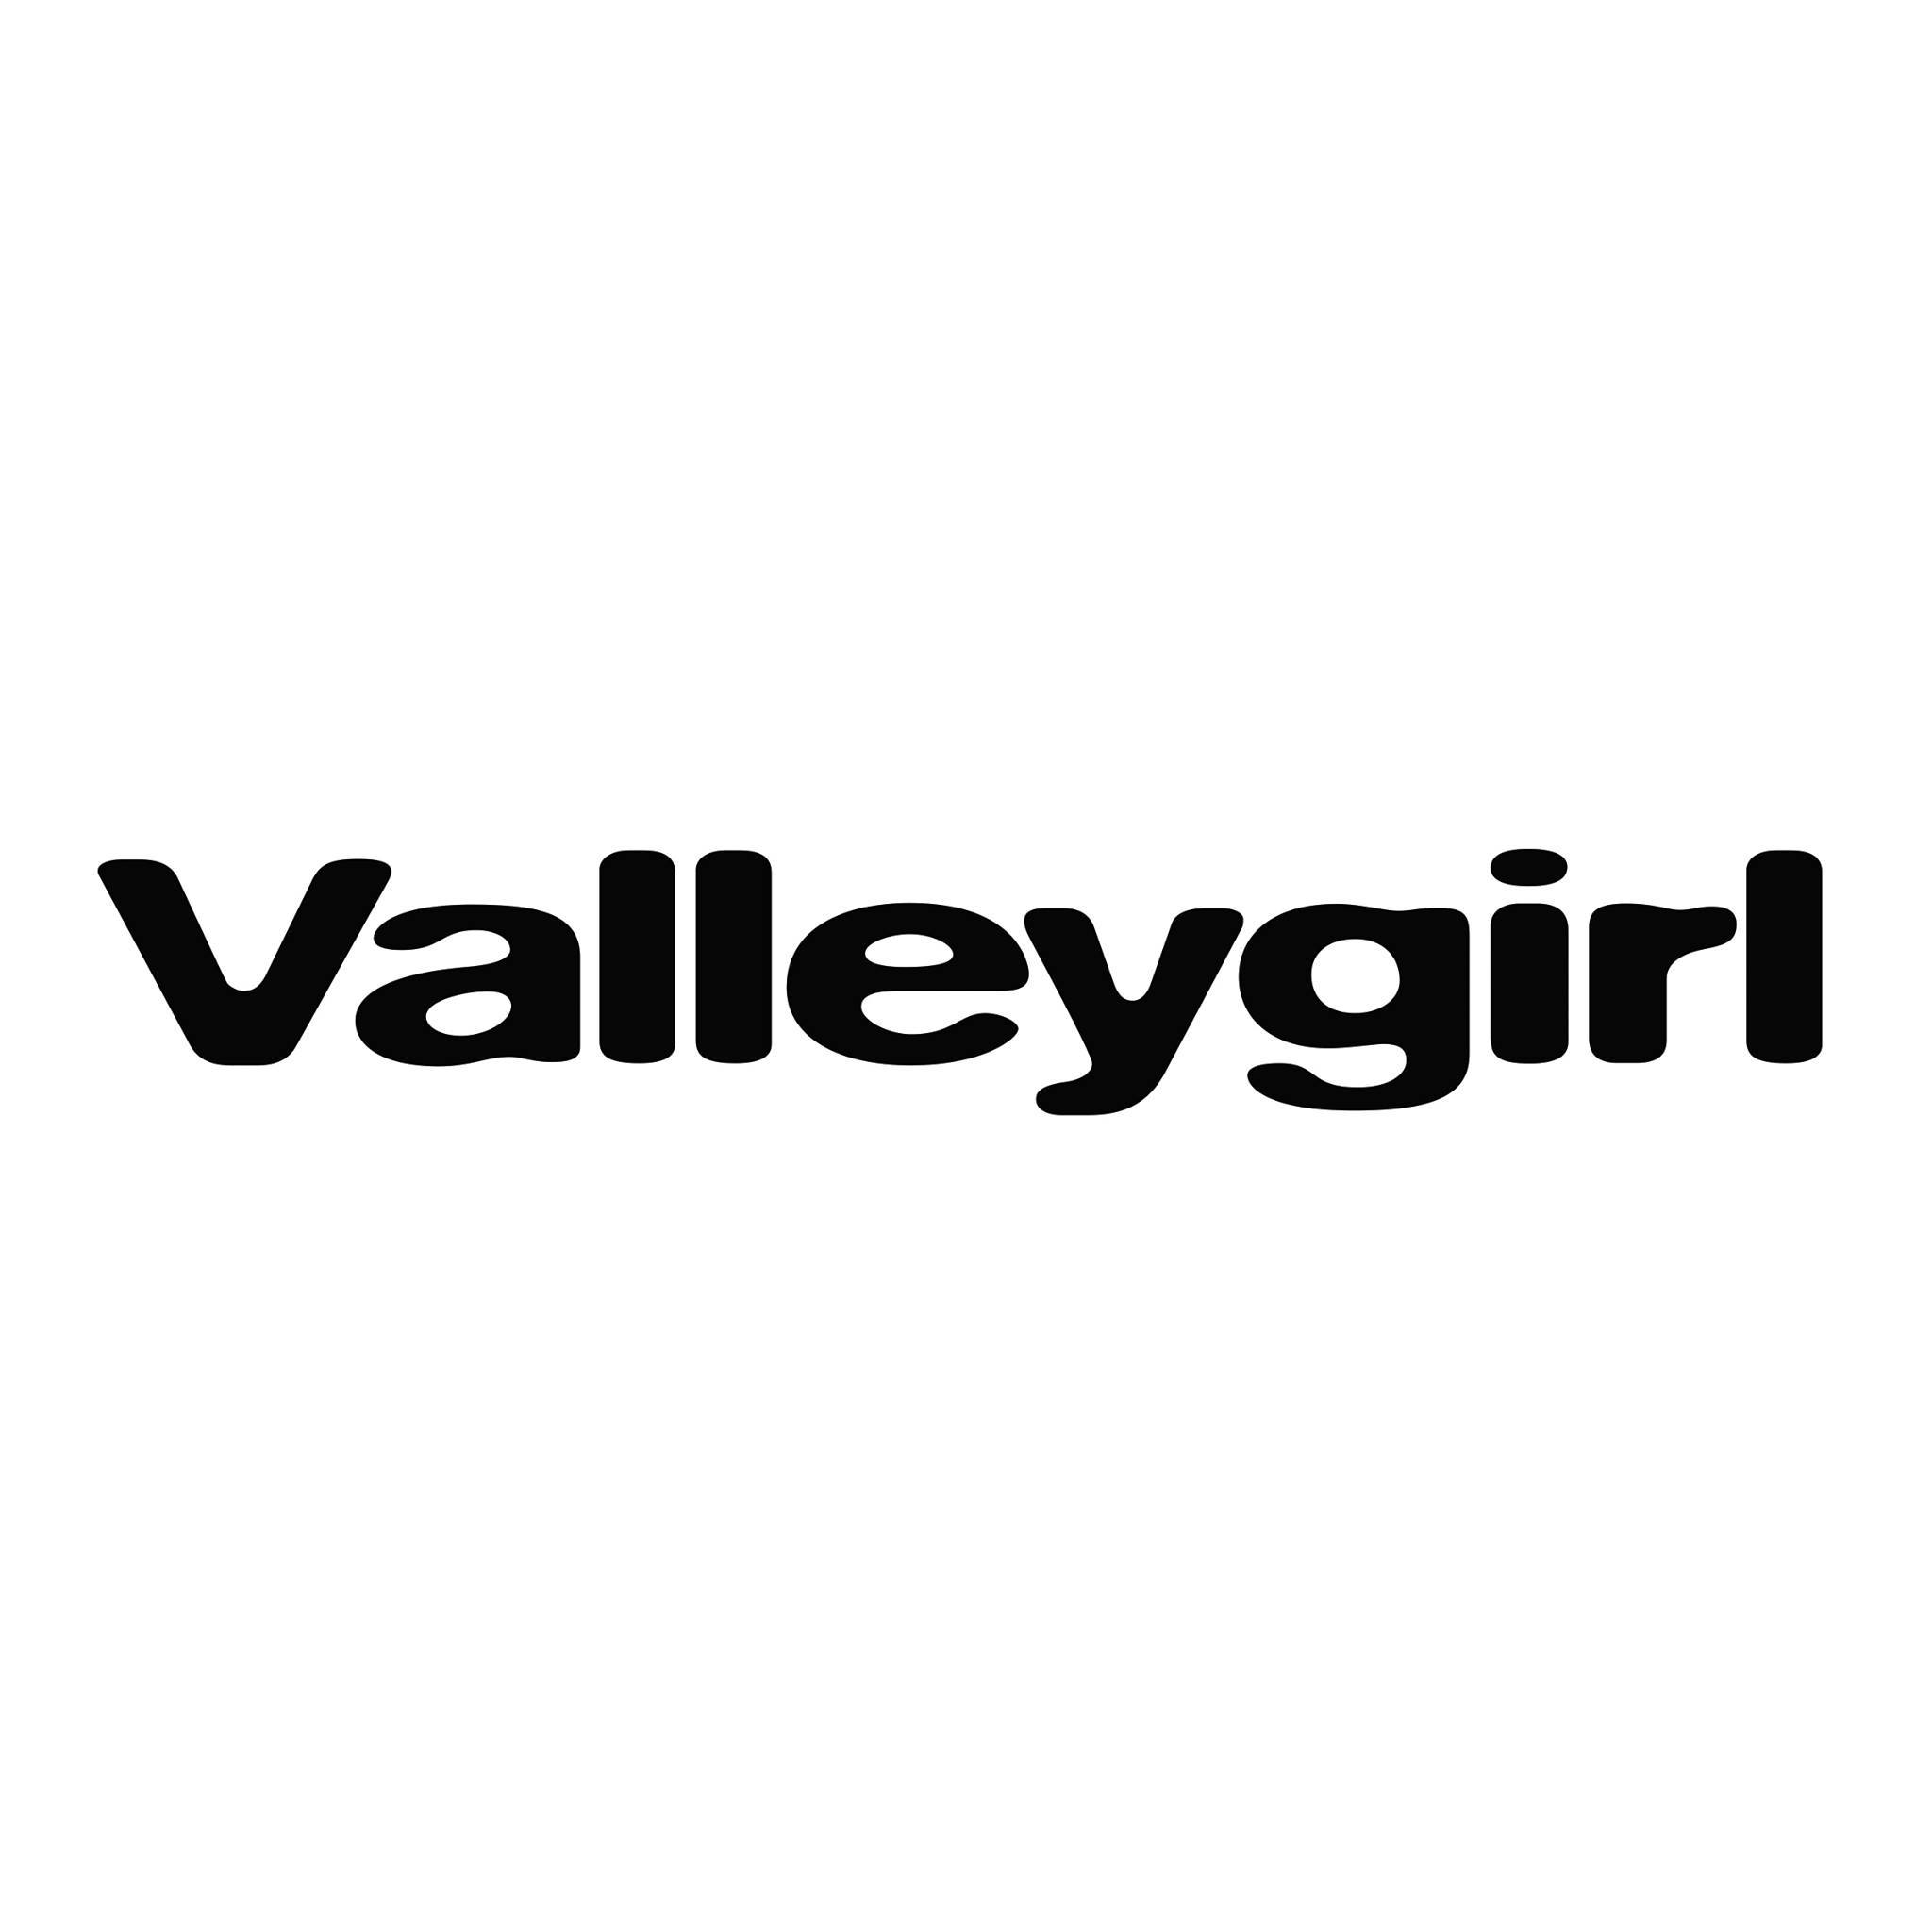 Company logo of Valleygirl